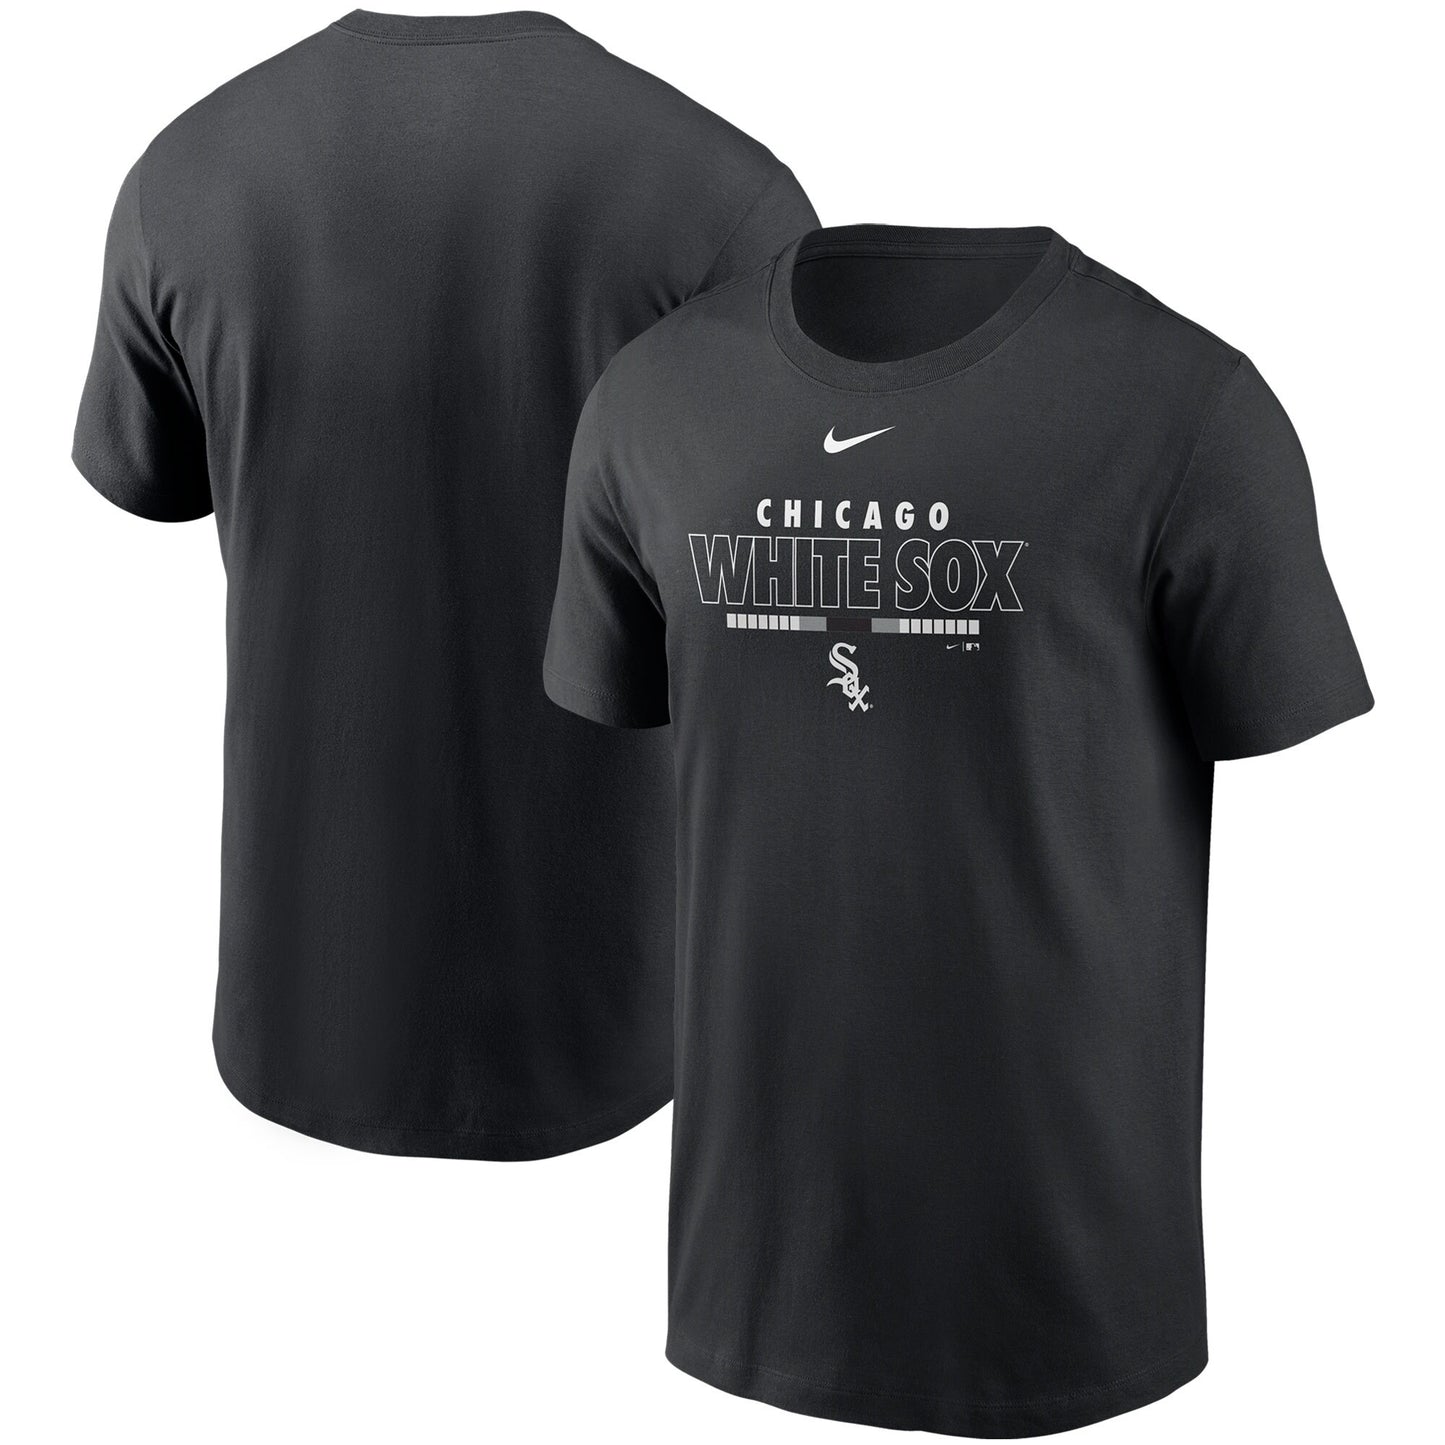 Men's Chicago White Sox Nike Black Color Bar T-Shirt